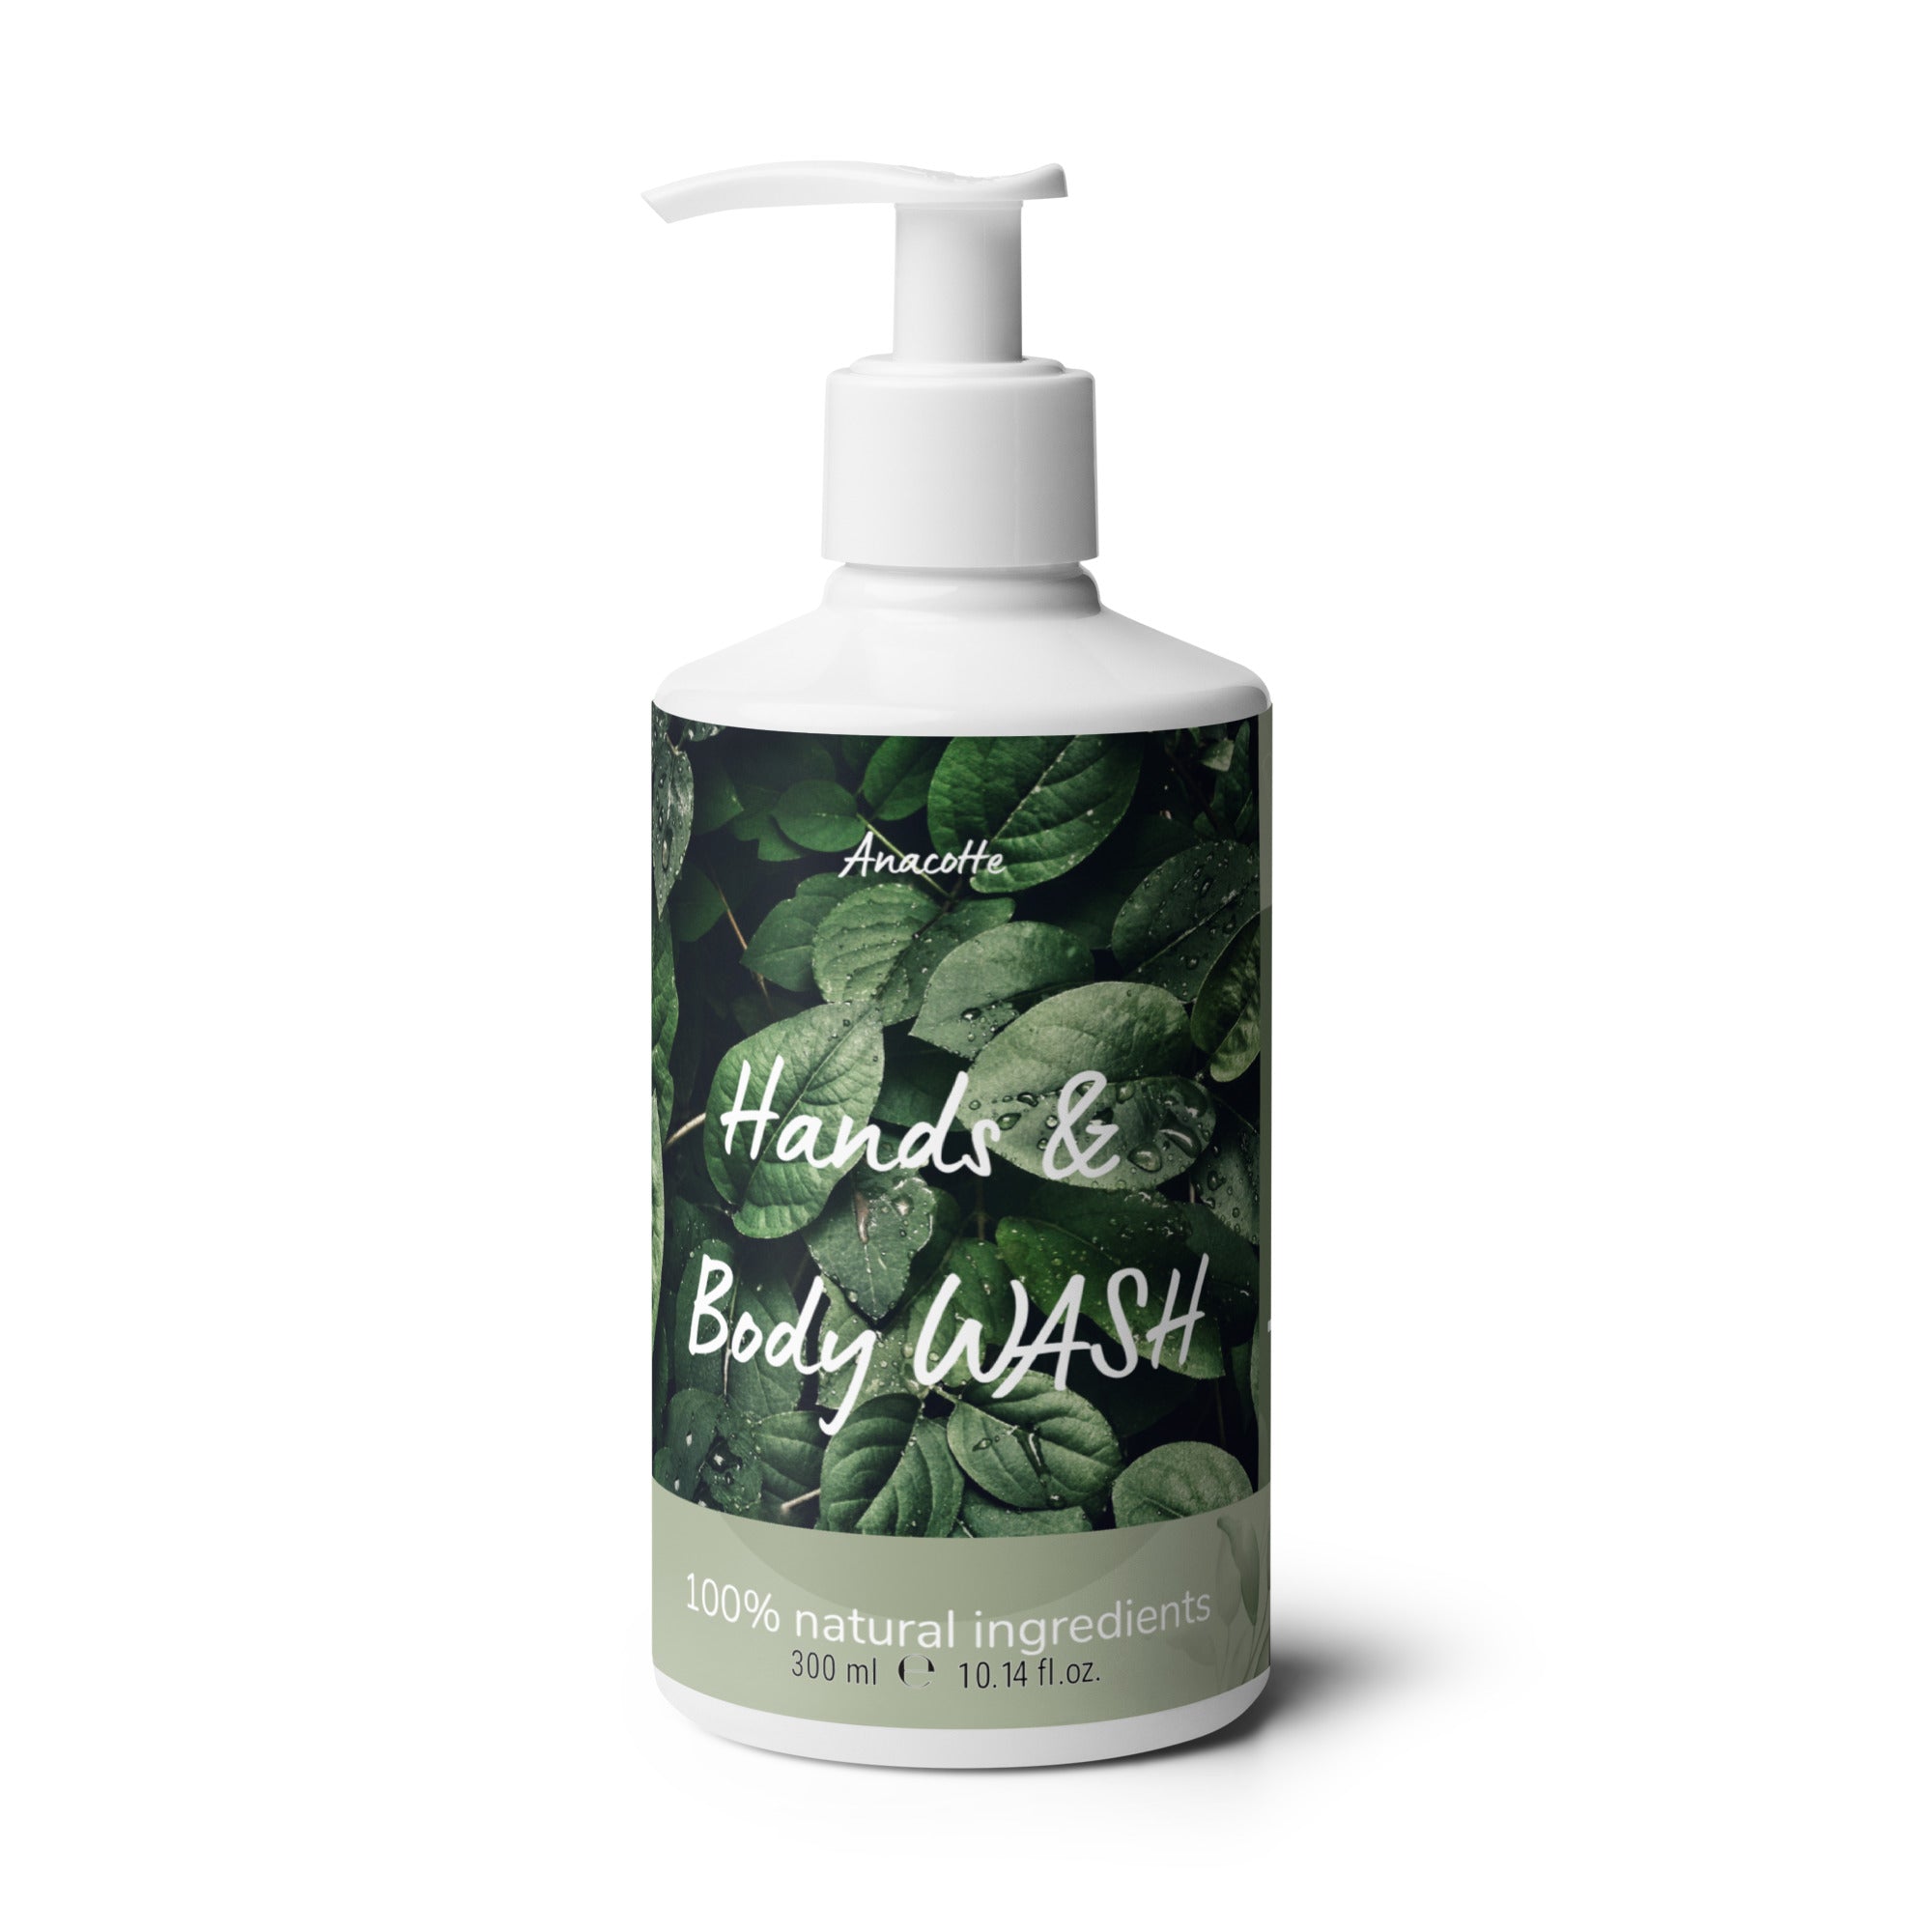 Anacotte Refreshing Hand & Body Wash: Feel the Clean, Fresh Feeling